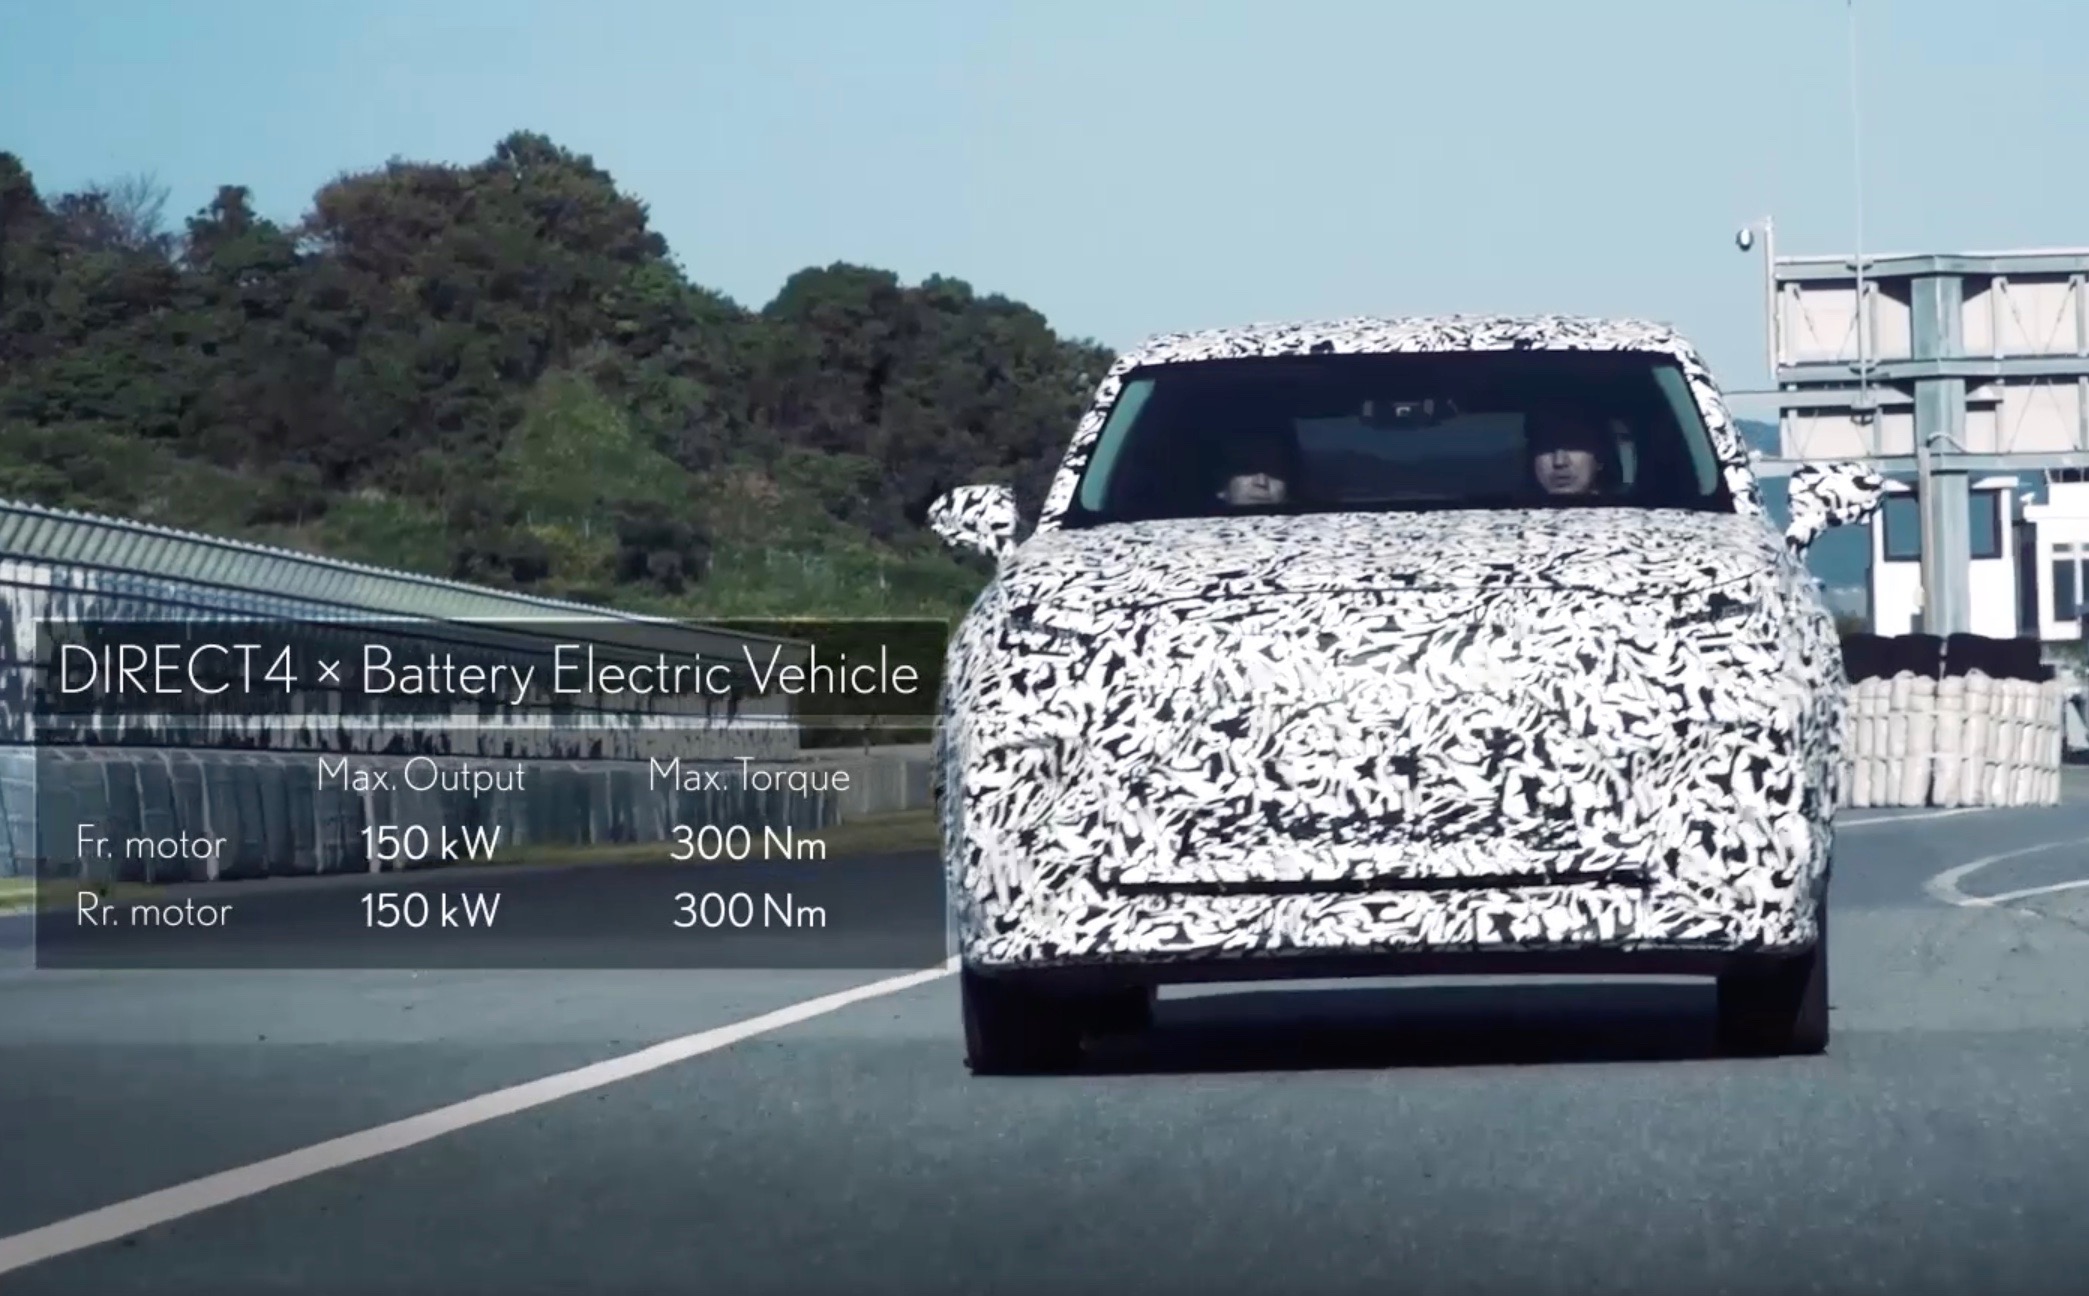 Lexus previews DIRECT4 EV tech with 300kW prototype (video)